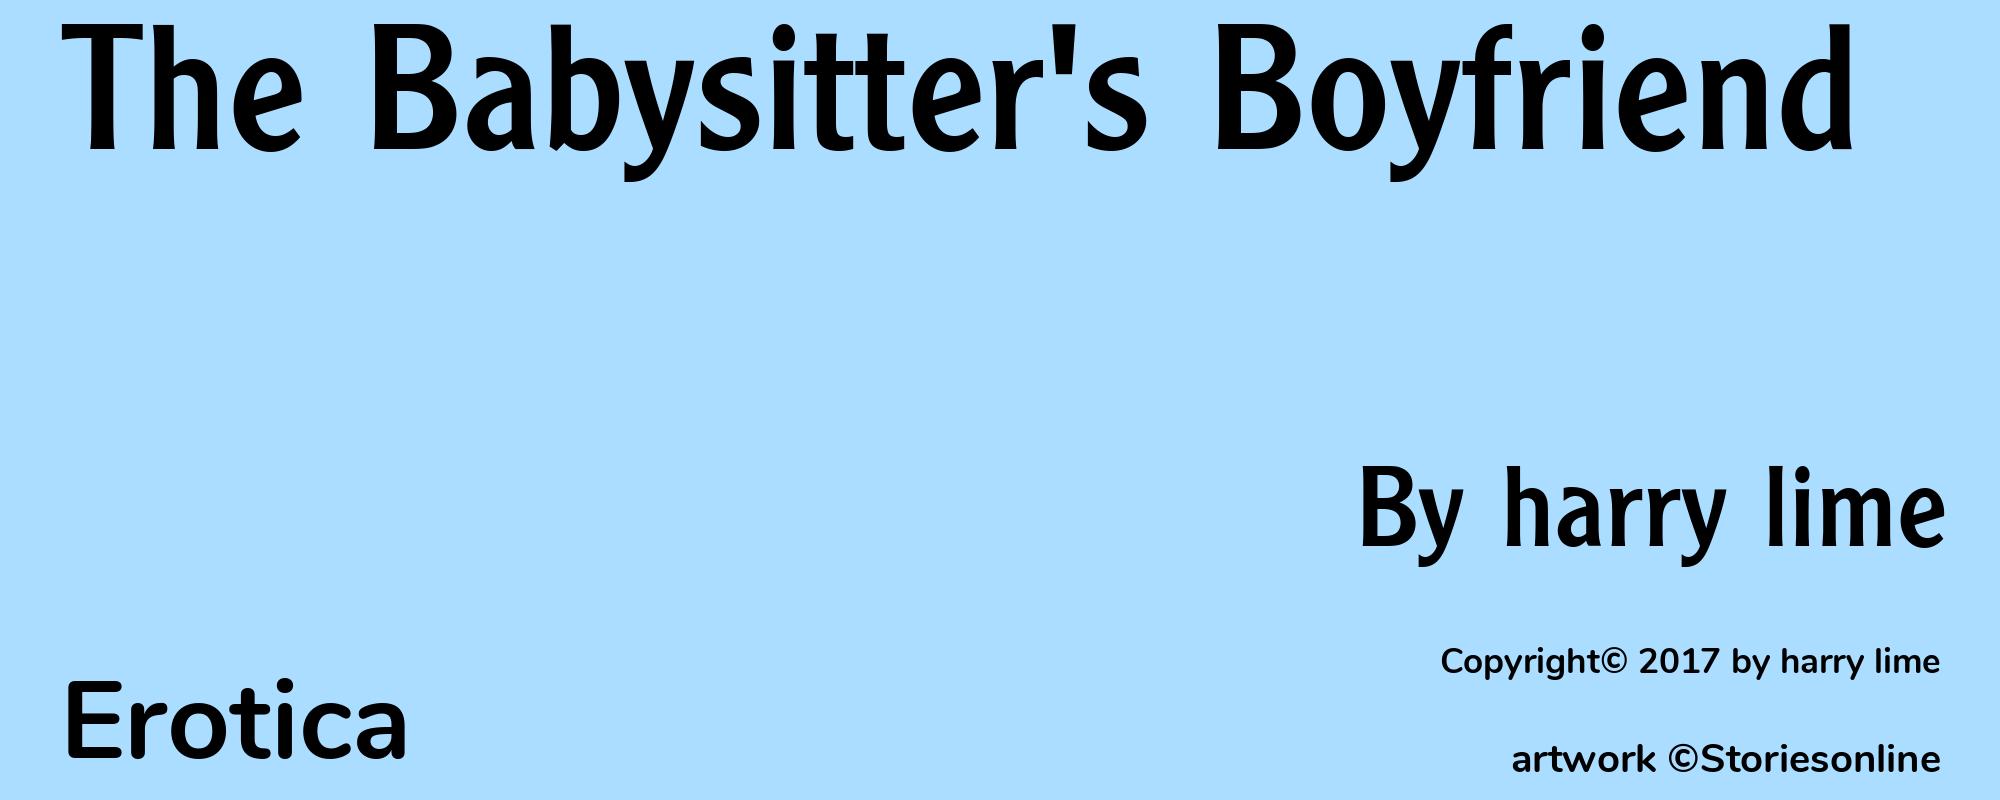 The Babysitter's Boyfriend - Cover